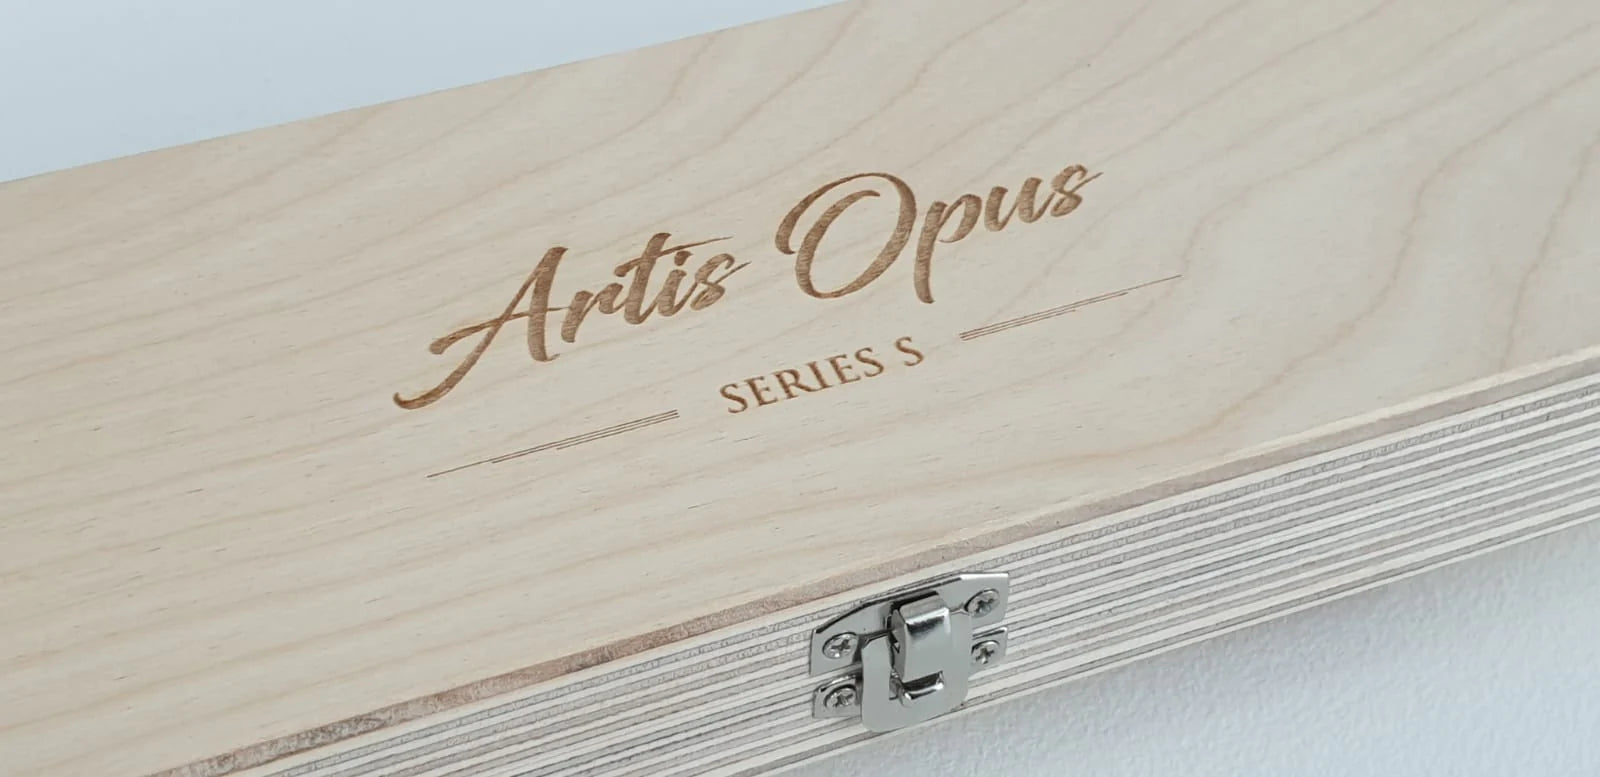 Artis Opus - S Series Brush #000 - Heretic Games